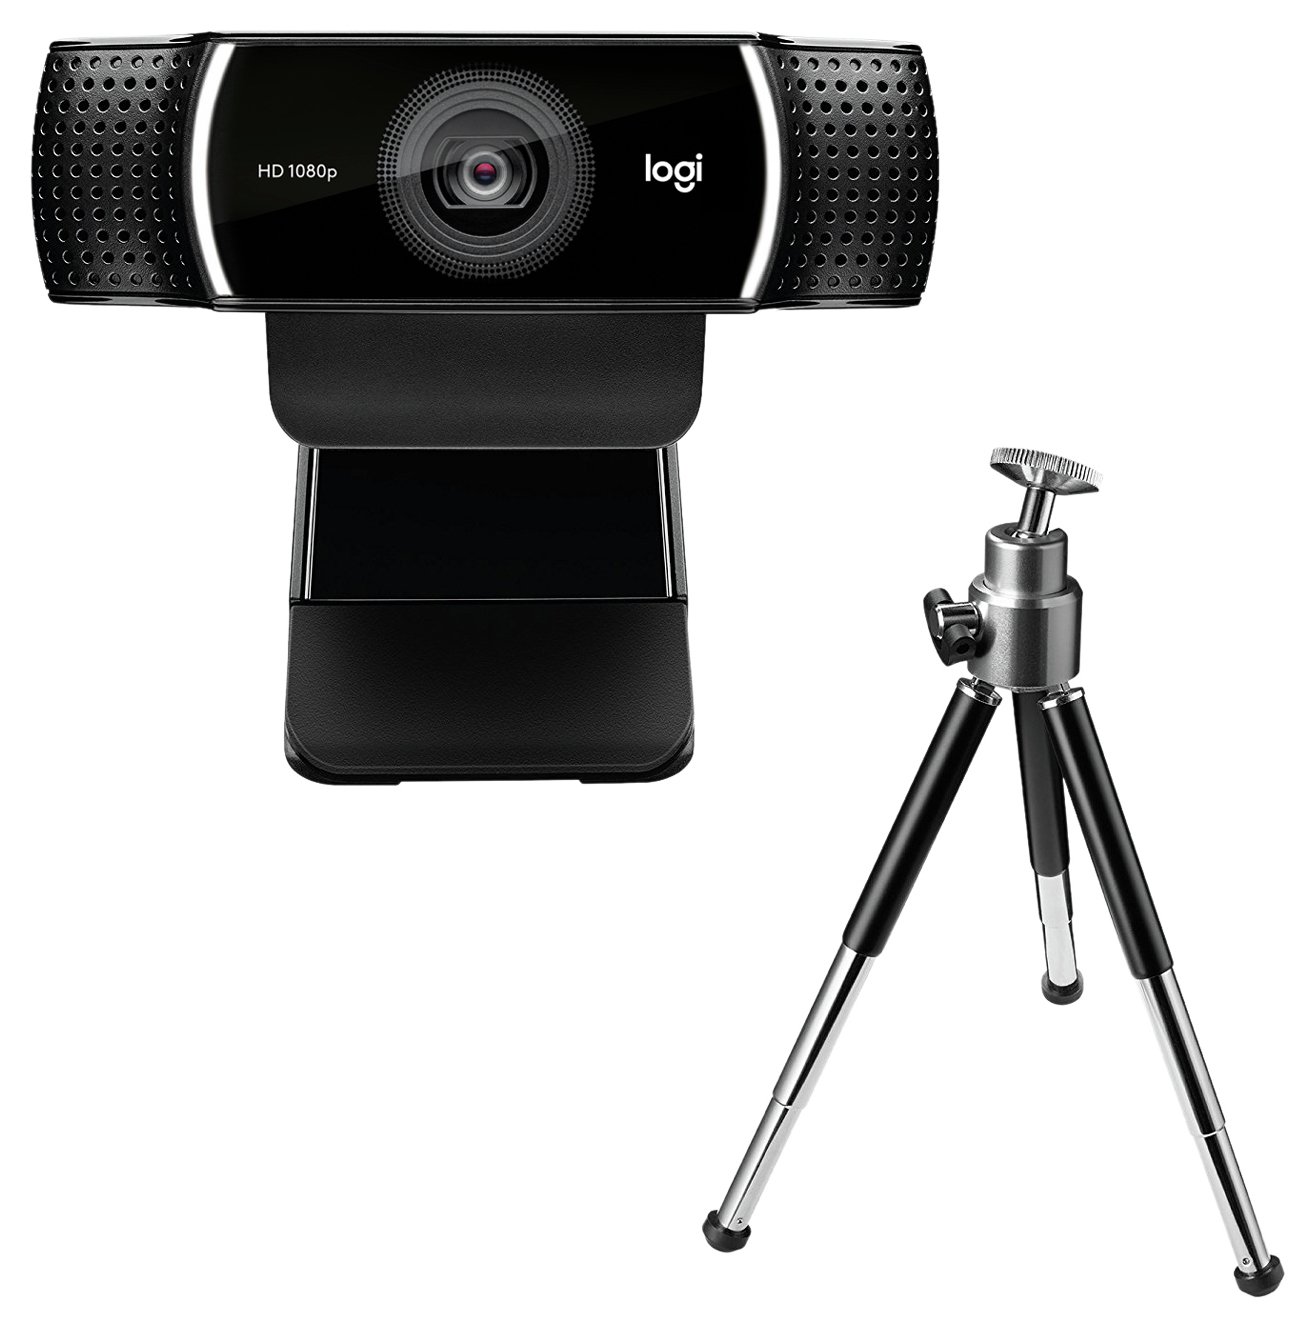 Logitech C922 Pro Stream Webcam review